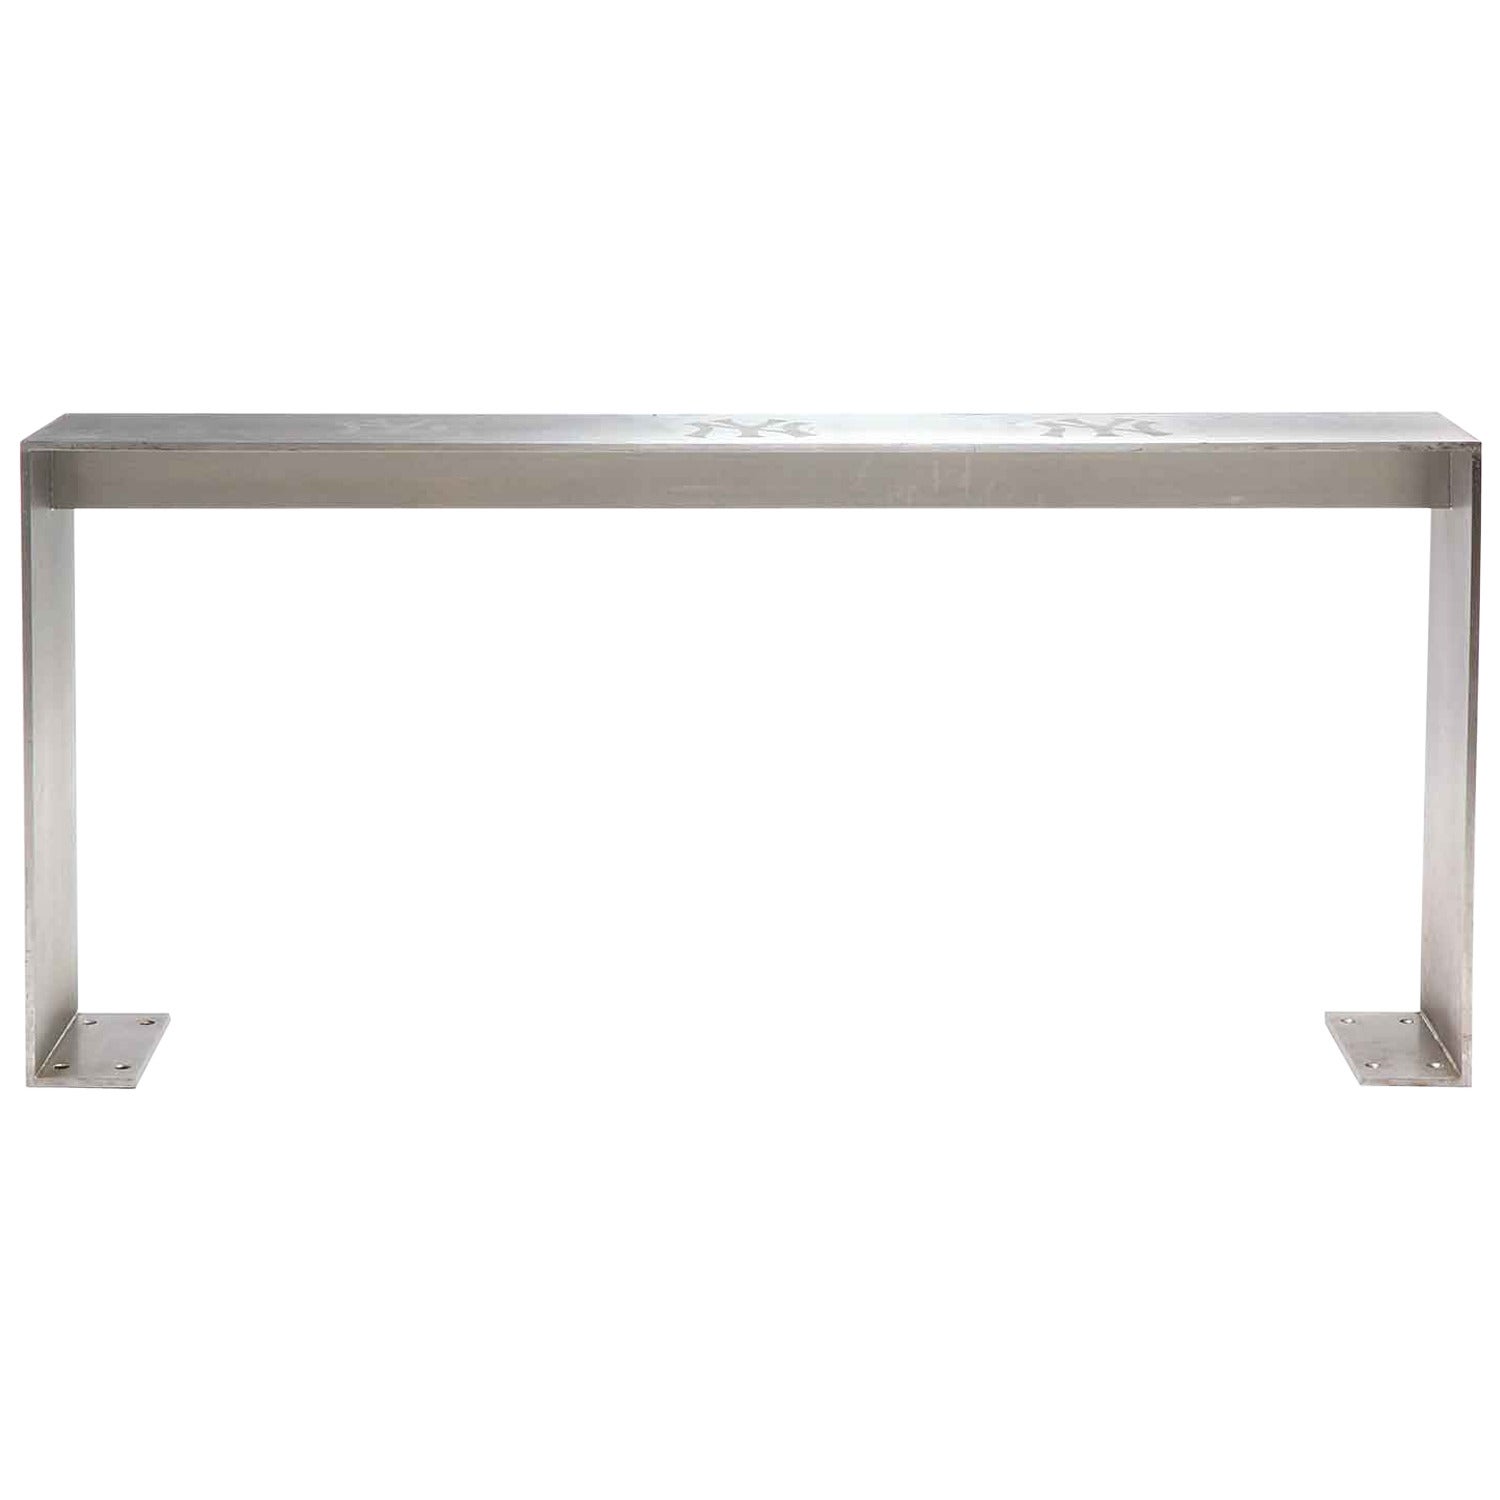 Low Minimalist Steel Table from Yankee Stadium